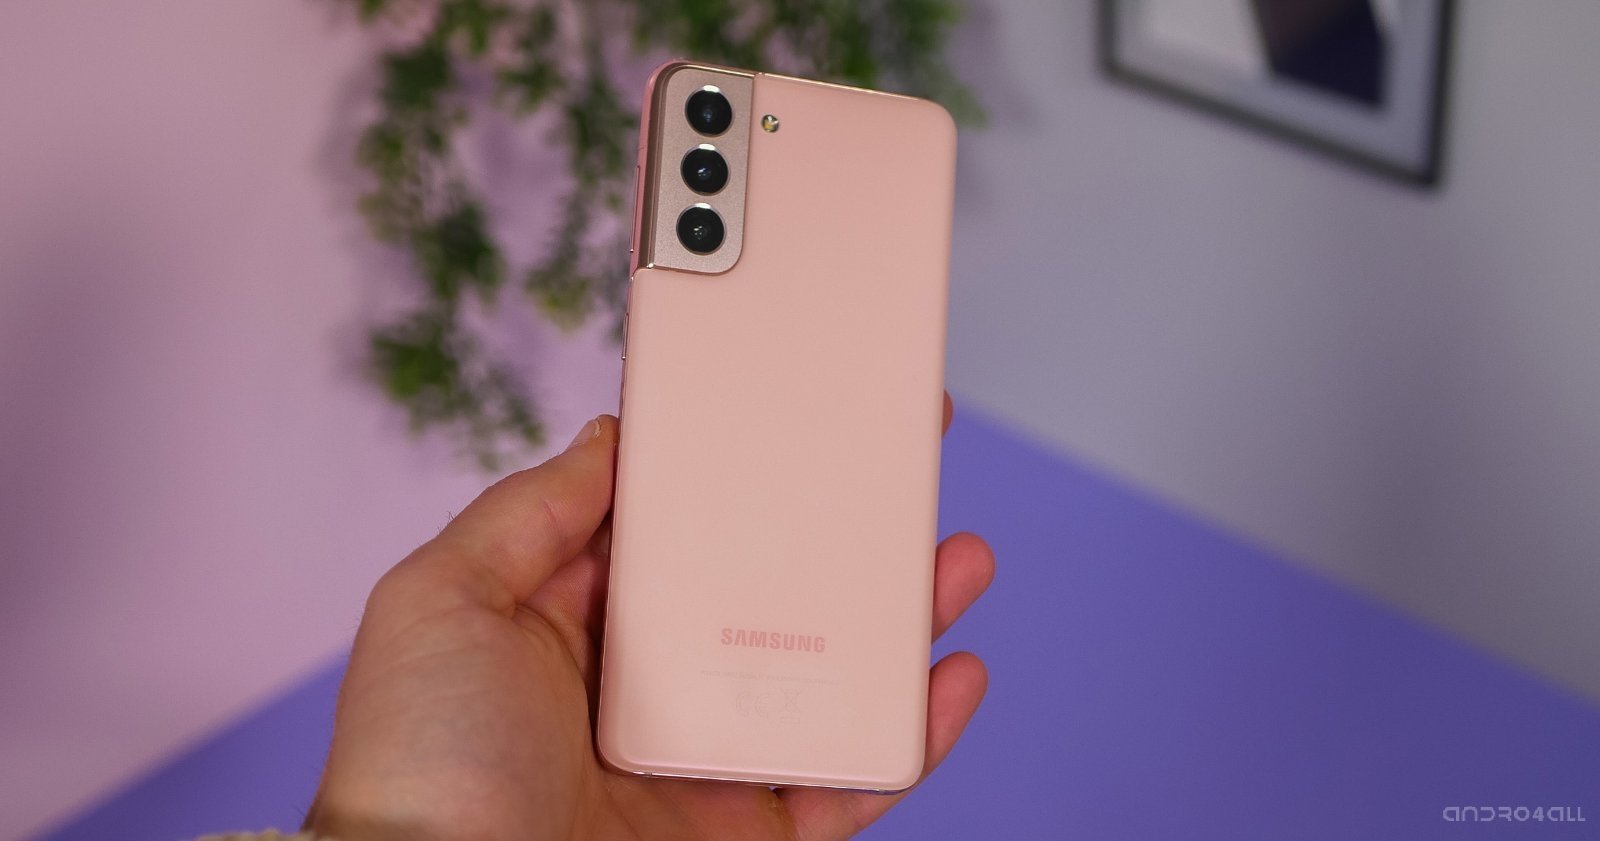 Samsung Galaxy S21 in pink, rear